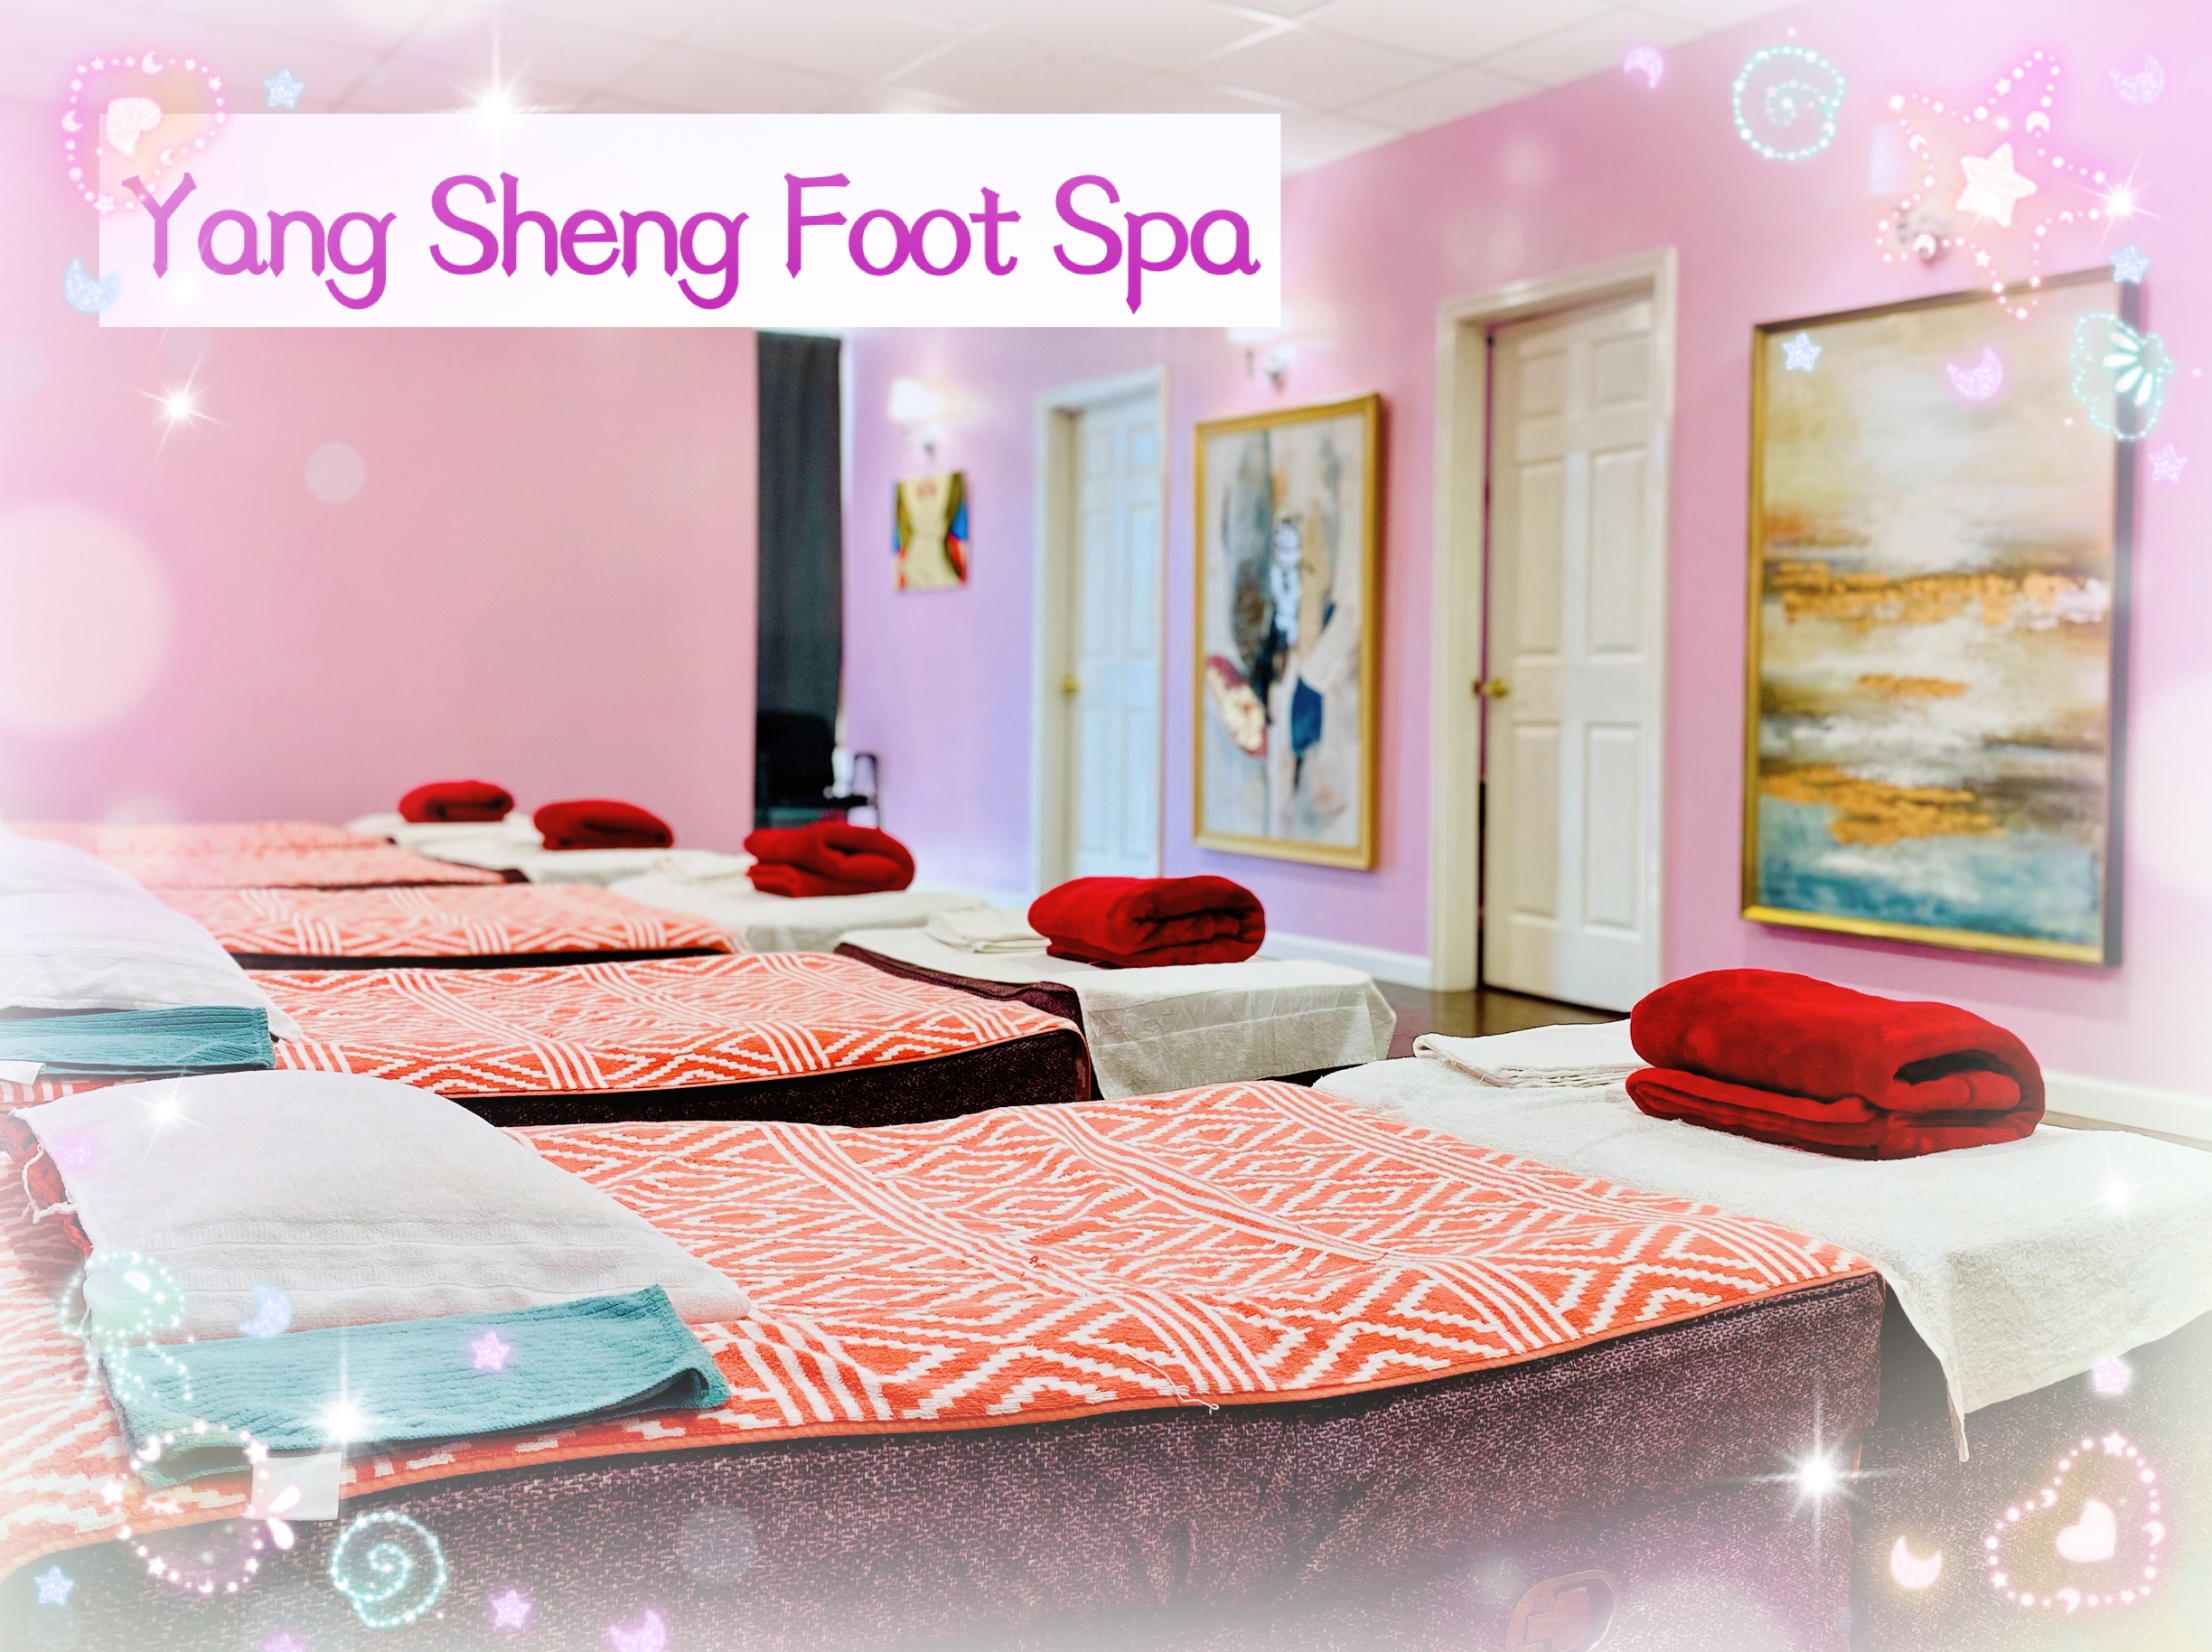 Relax Rejuvenate At Yangsheng Foot Spa D Square